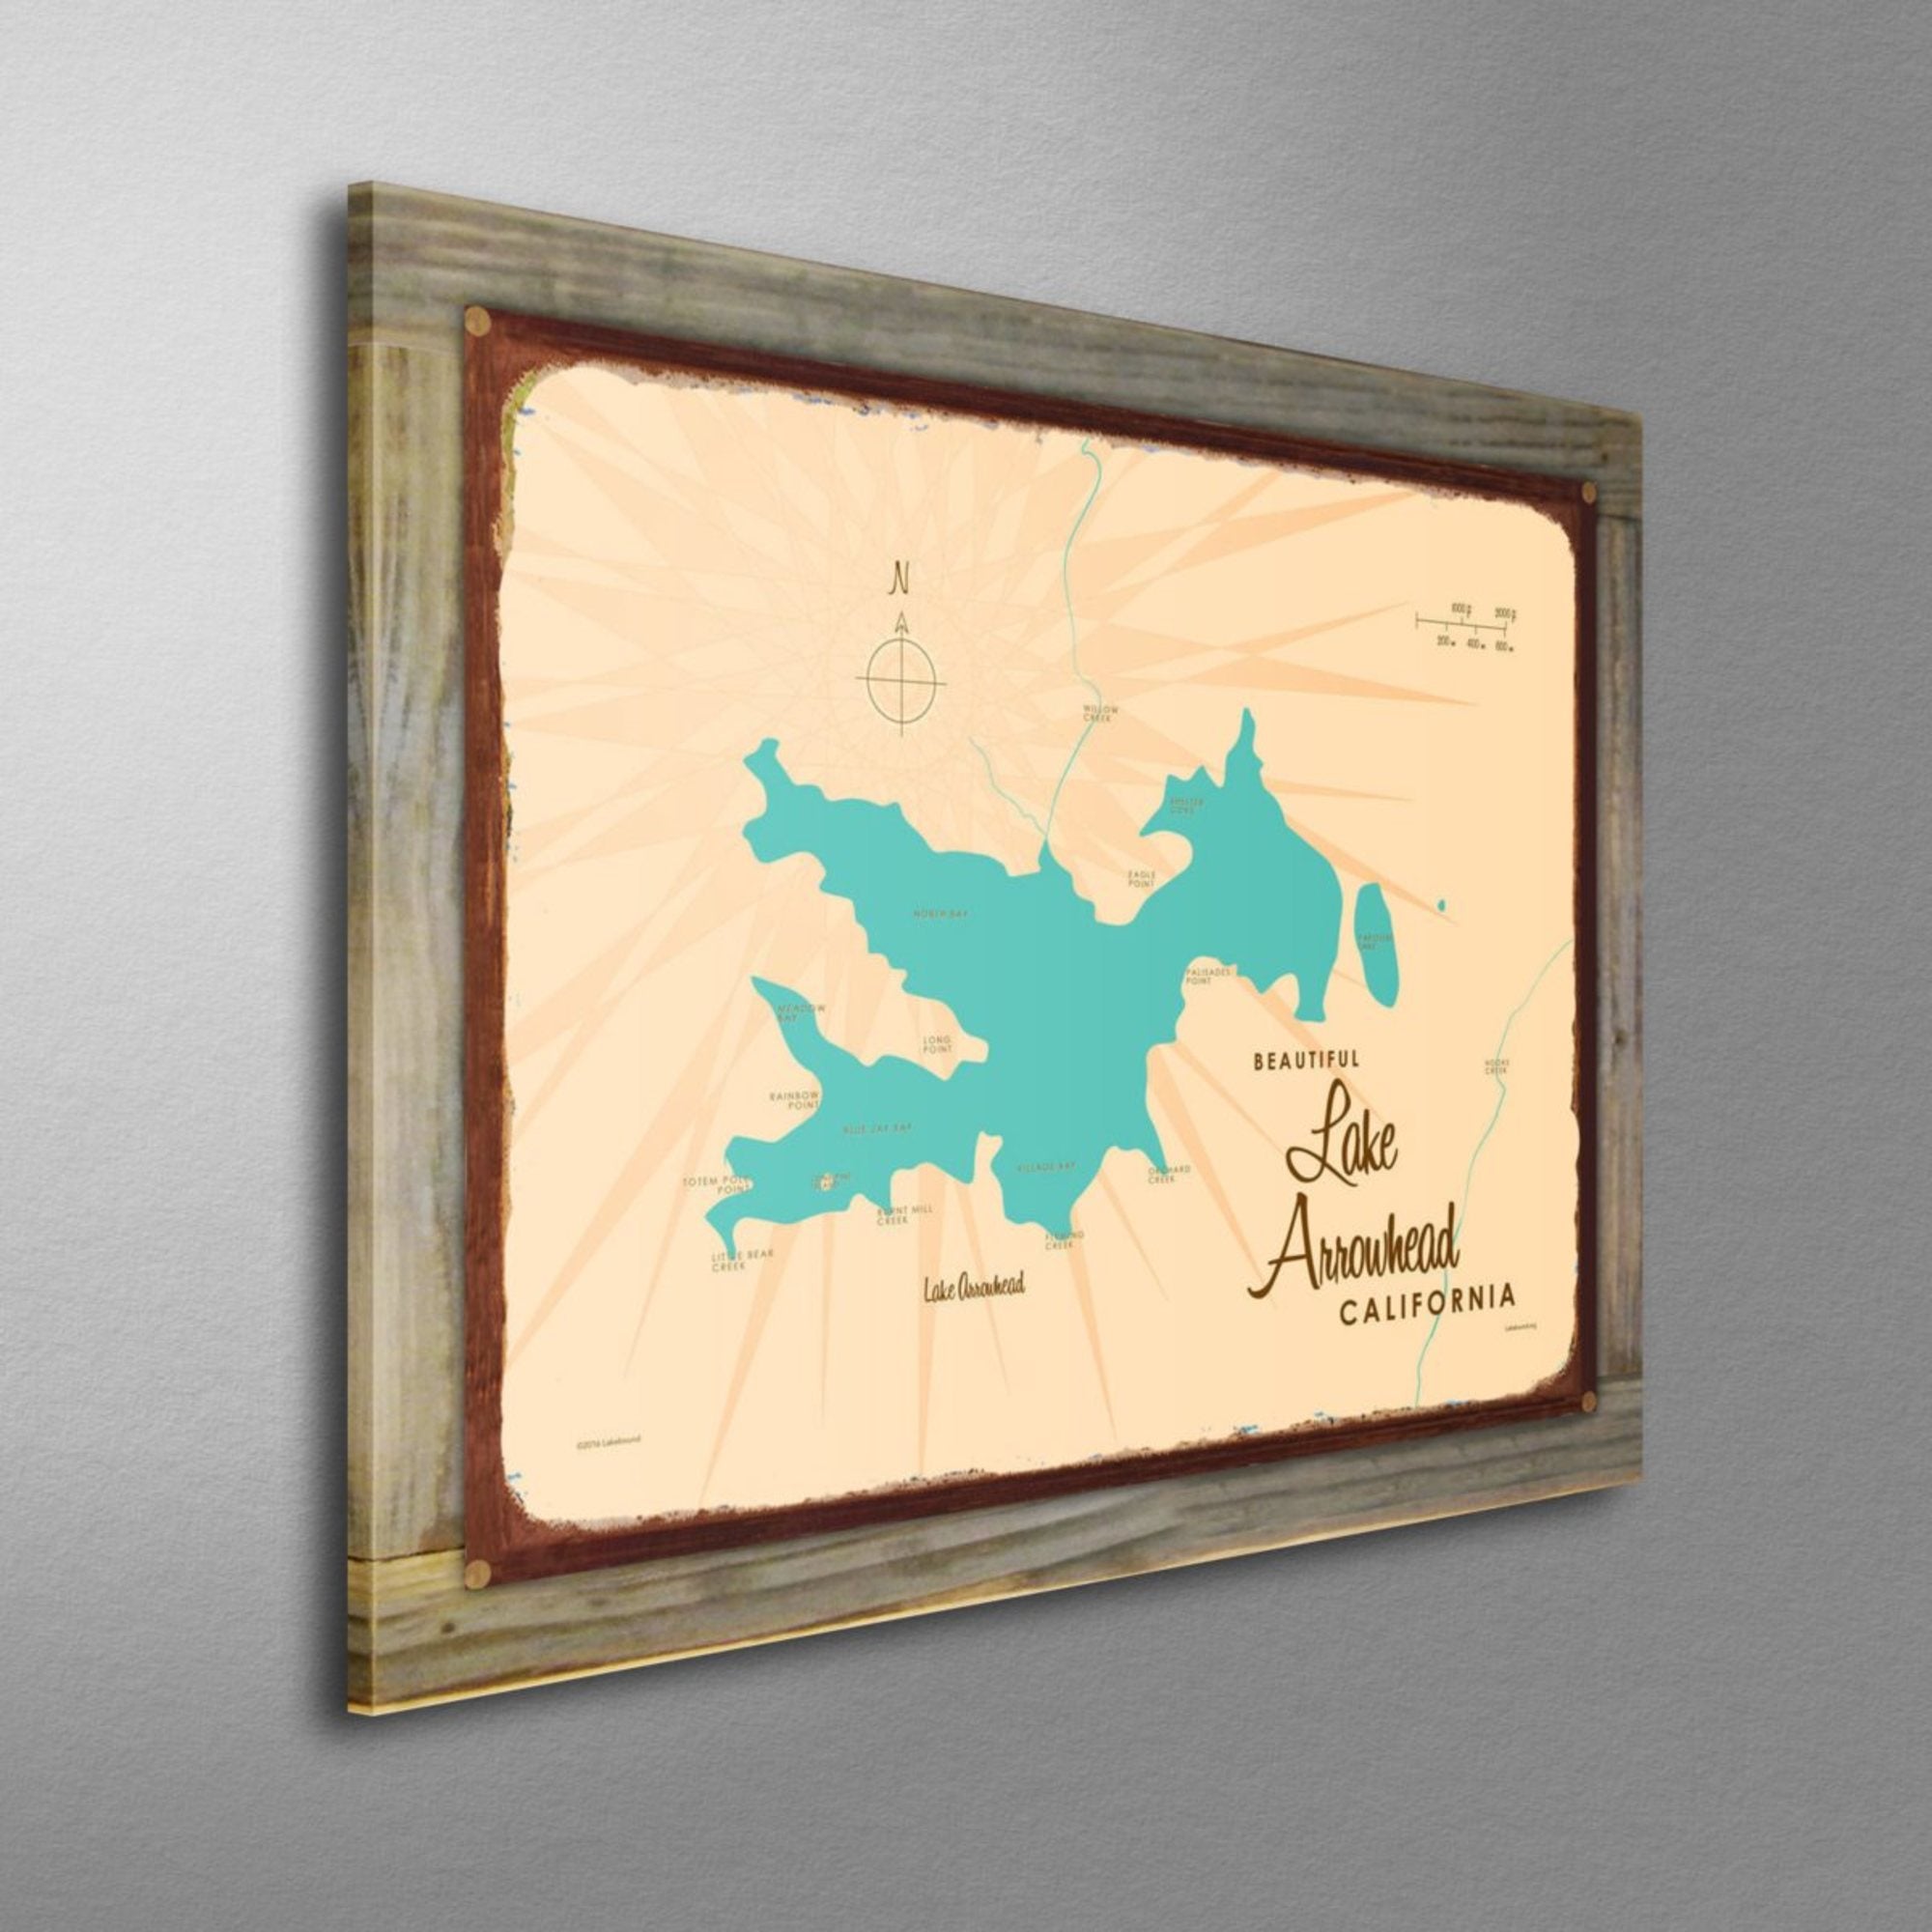 Lake Arrowhead California, Wood-Mounted Rustic Metal Sign Map Art